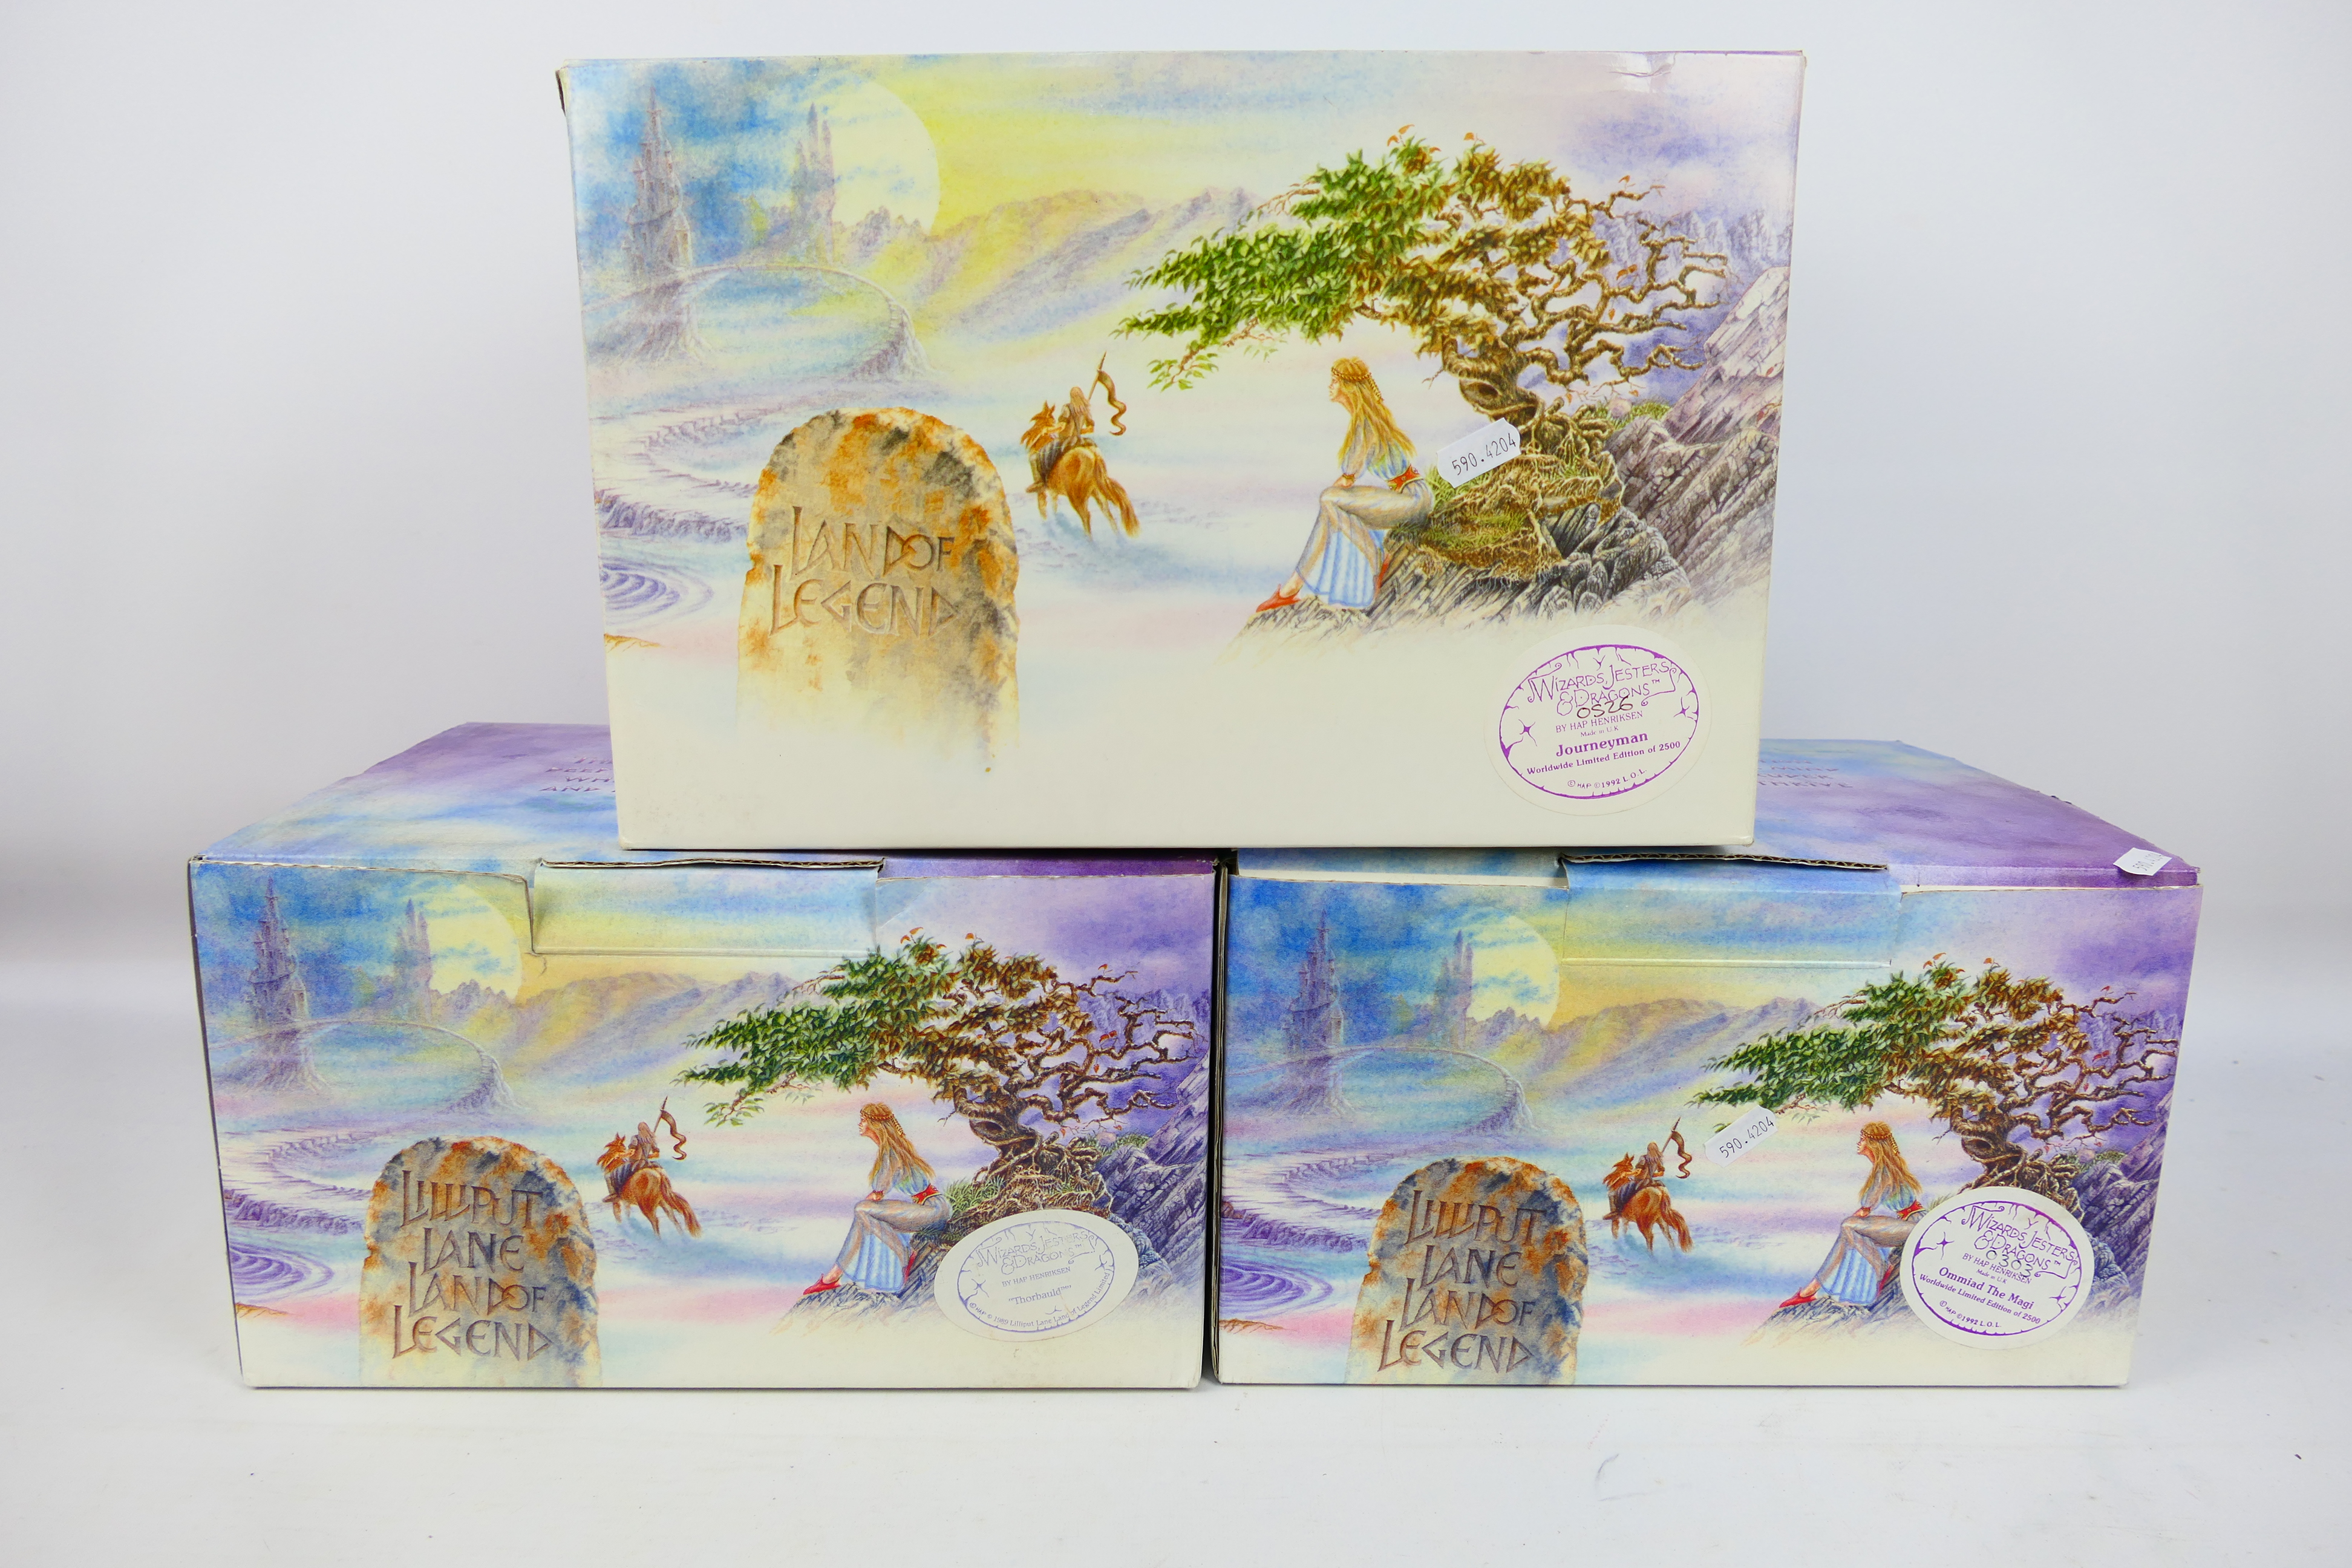 Three boxed limited edition Lilliput Lane Land Of Legend fantasy figures designed by Hap Henriksen - Image 7 of 7